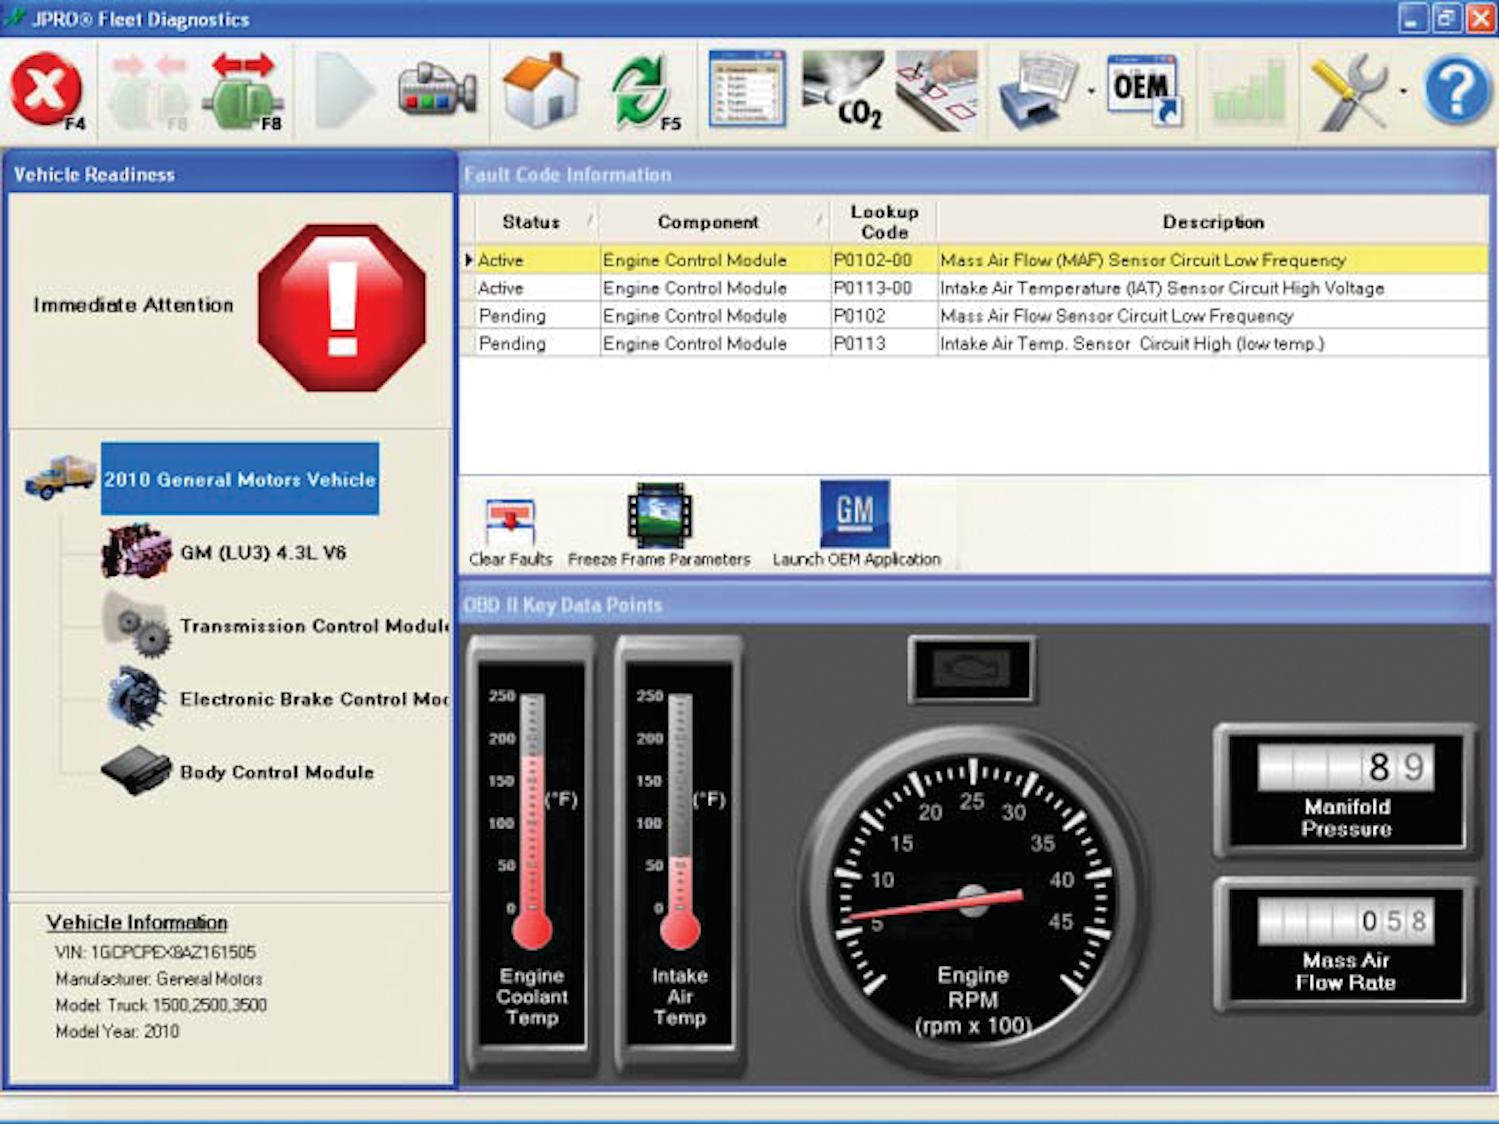 JPRO Commercial Fleet Diagnostics software v5.1 Vehicle Service Pros